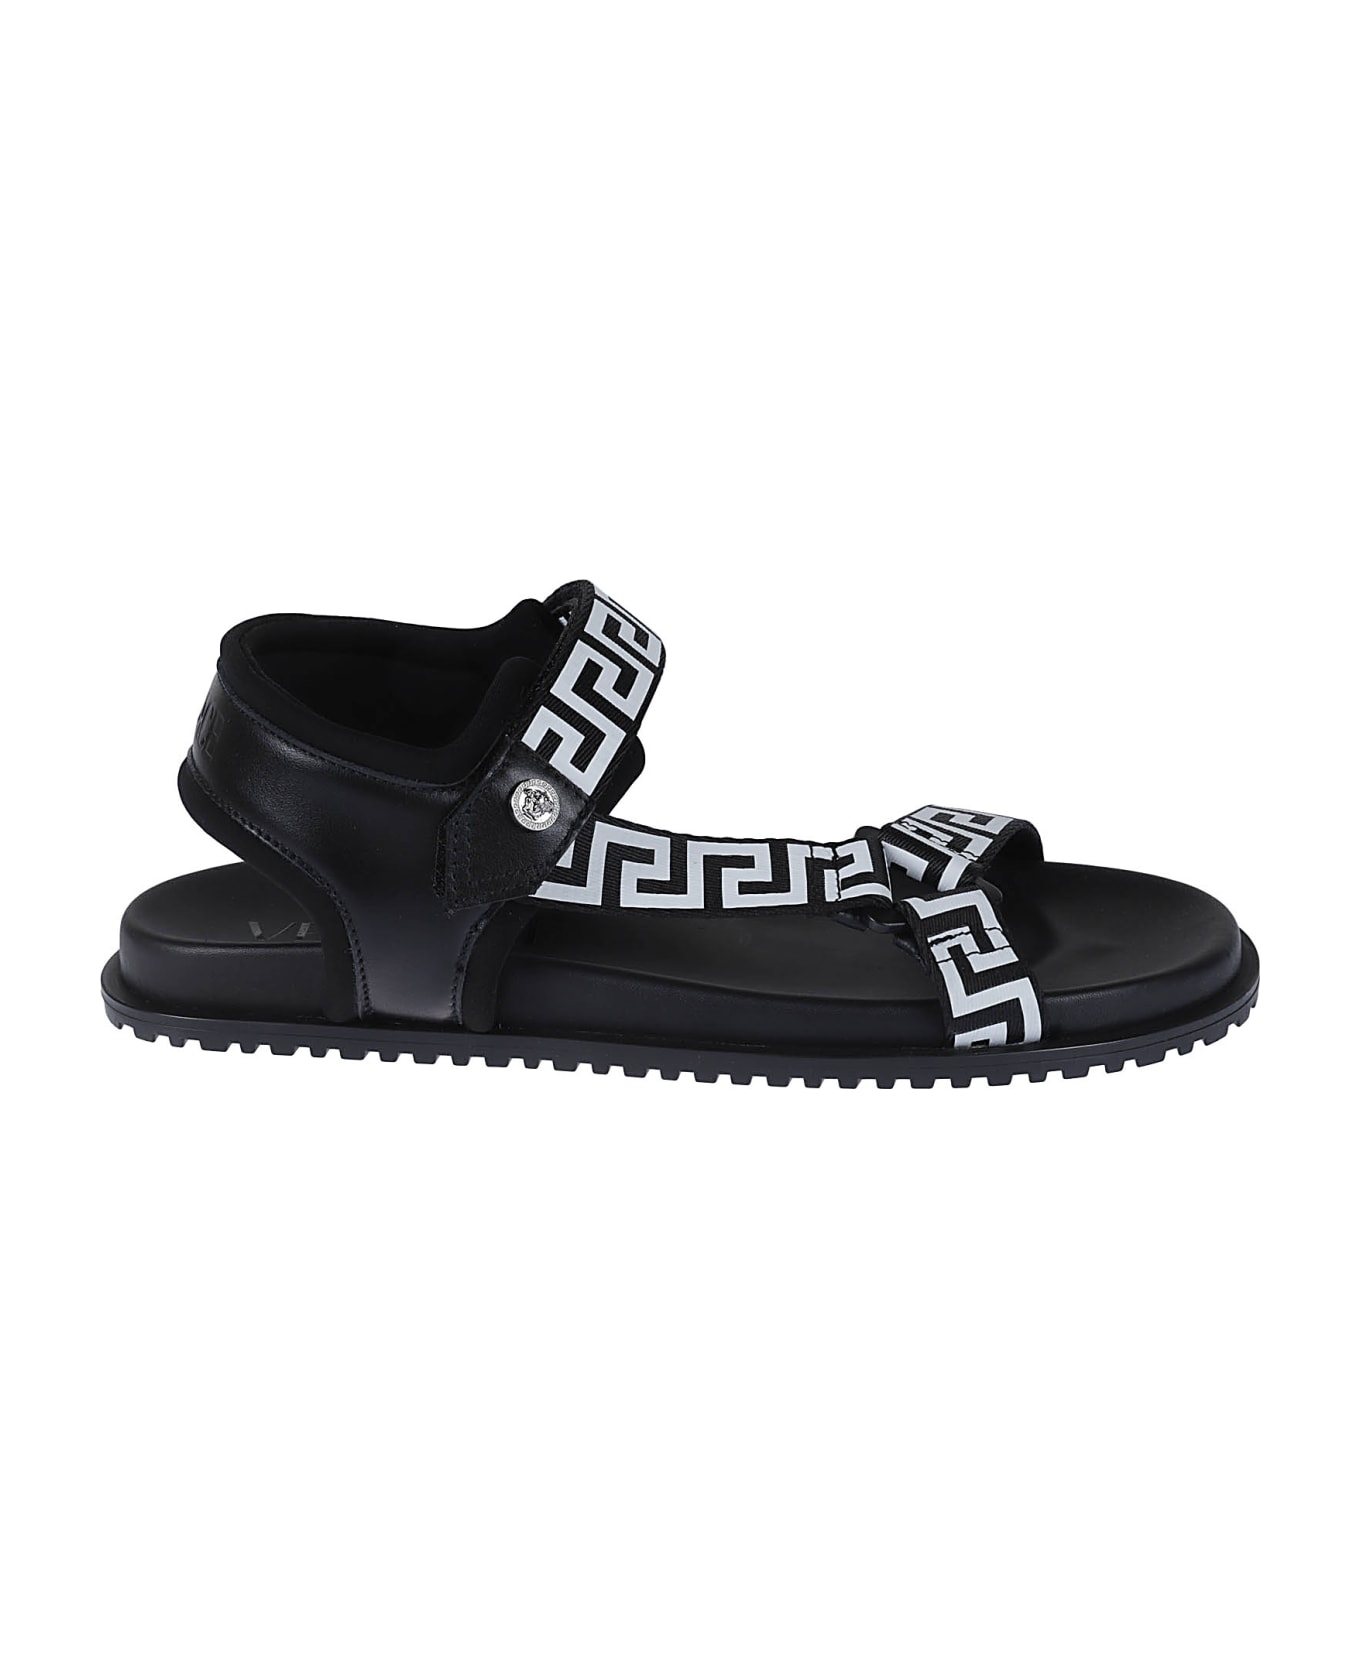 Versace Ankle Strap Sandals - Black/White